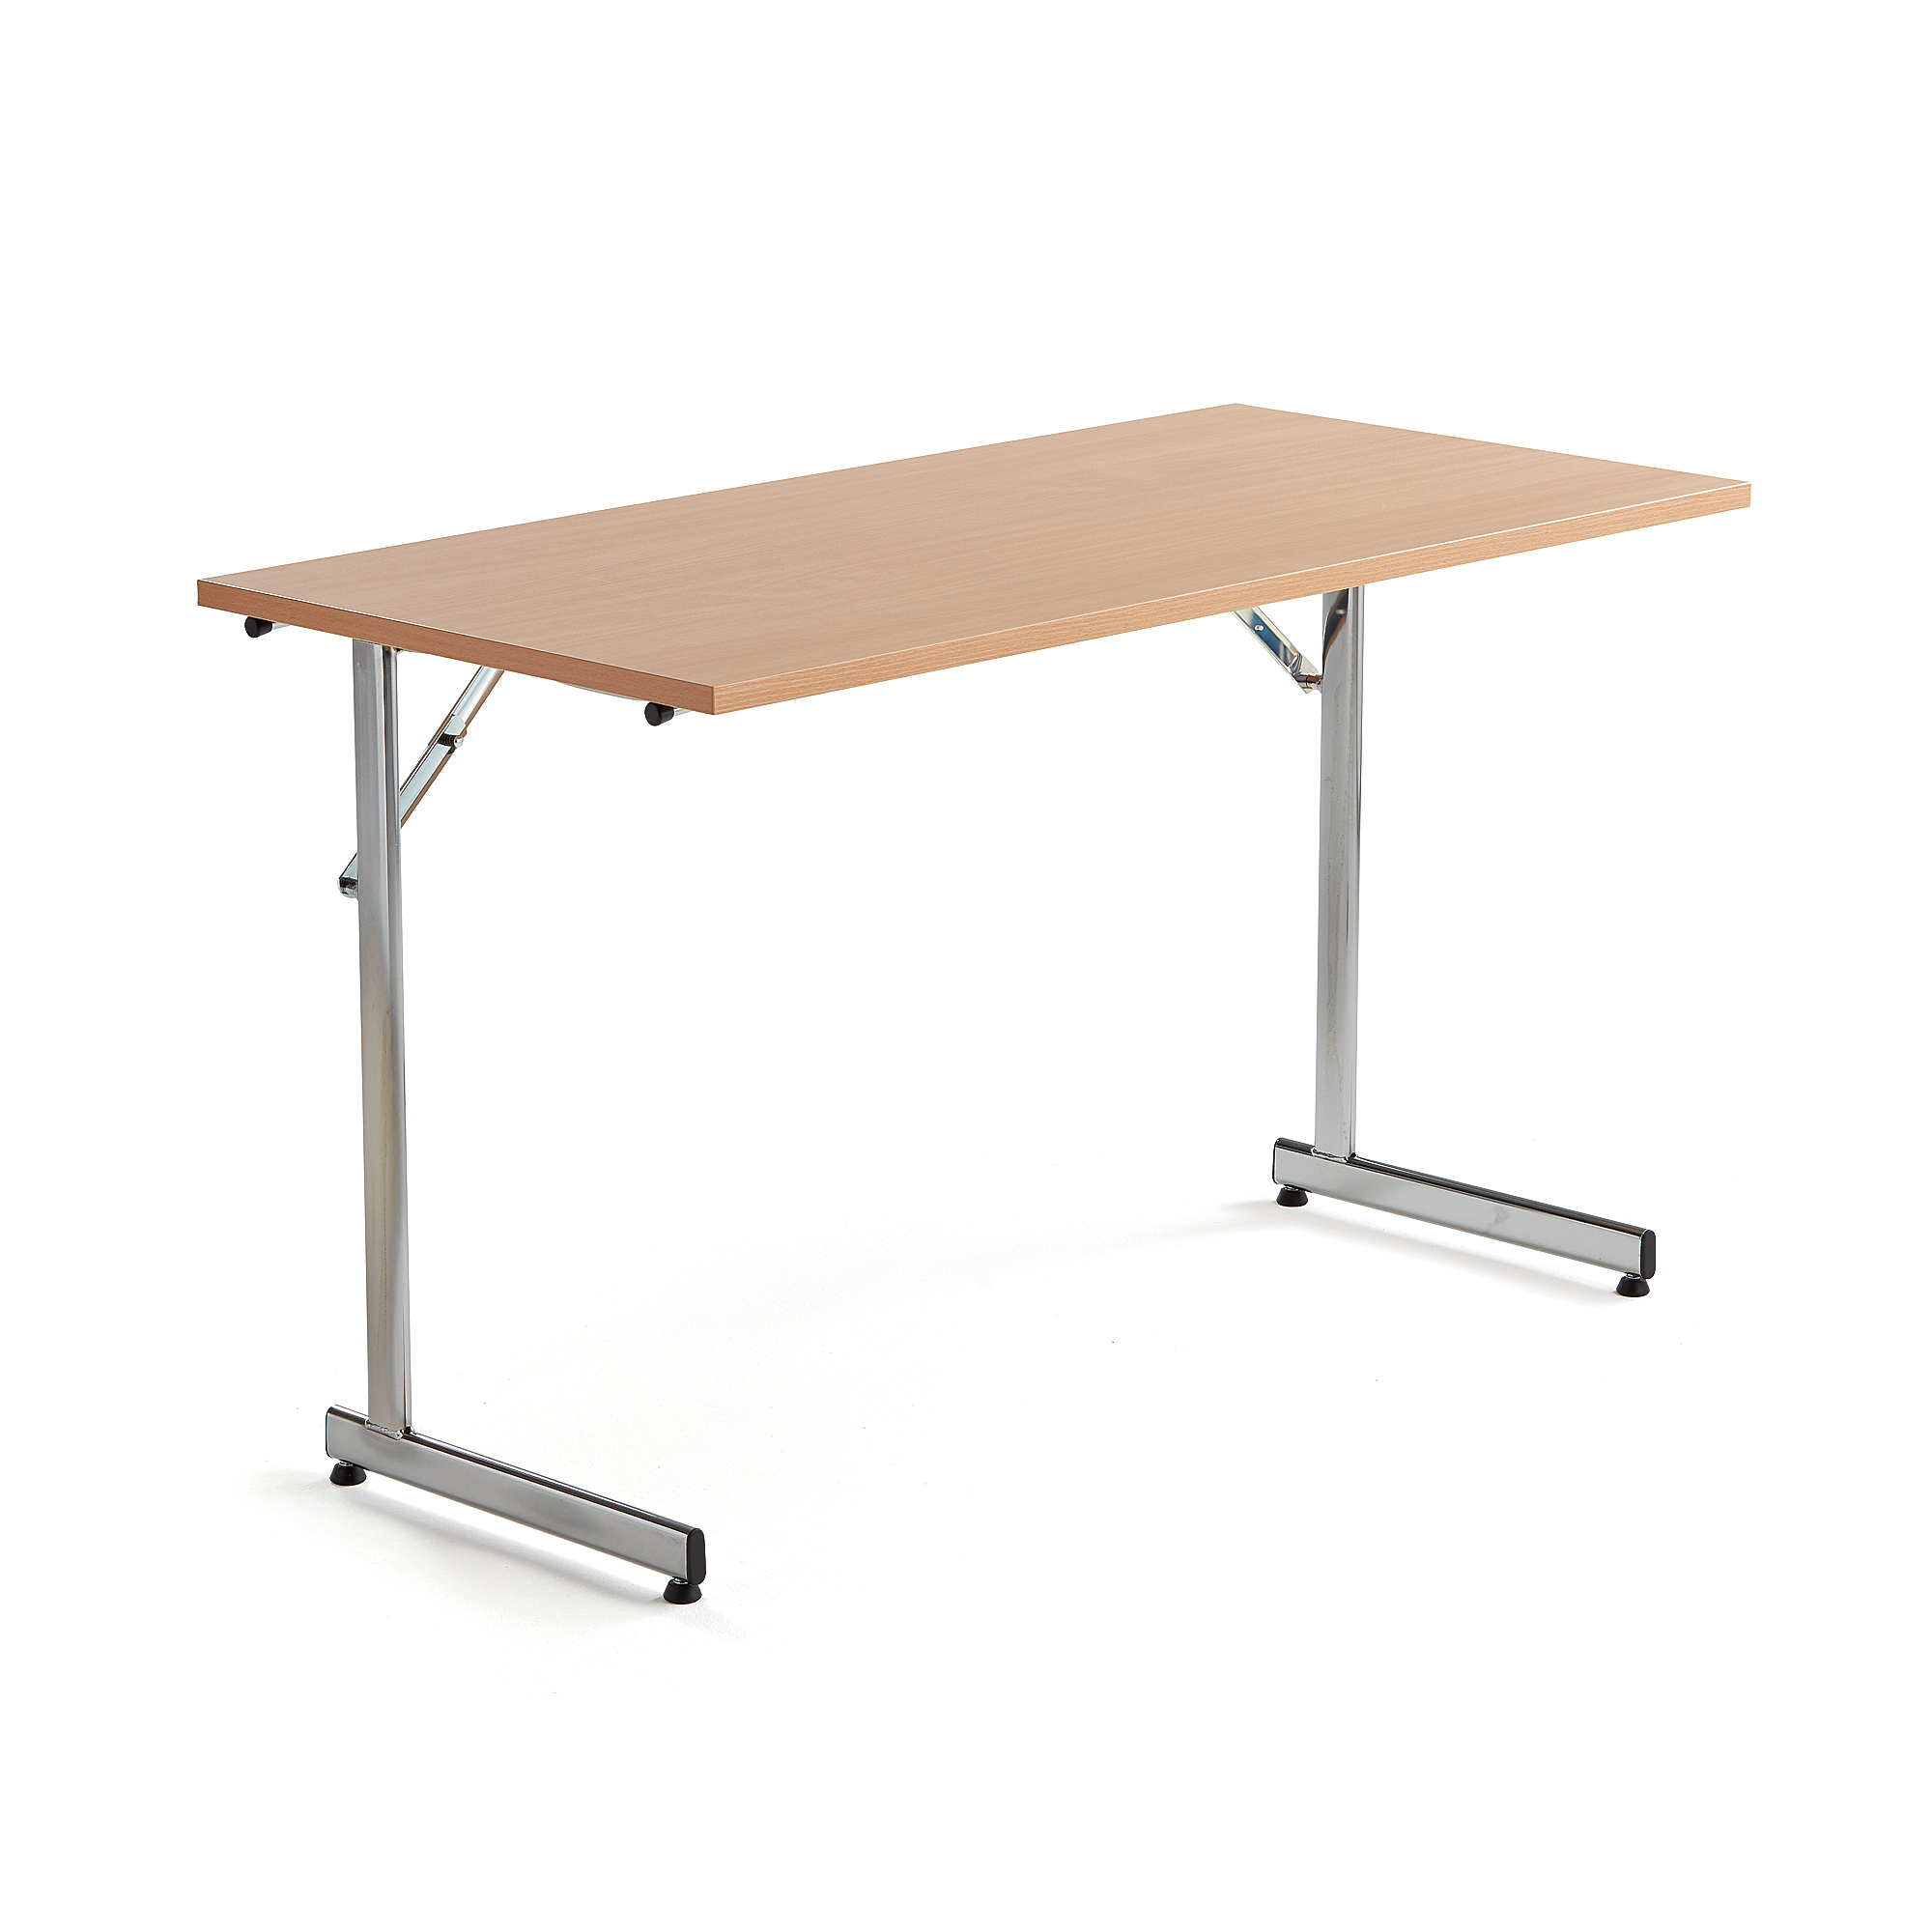 Skládací stůl CLAIRE, 1200x600 mm, lamino buk, chrom